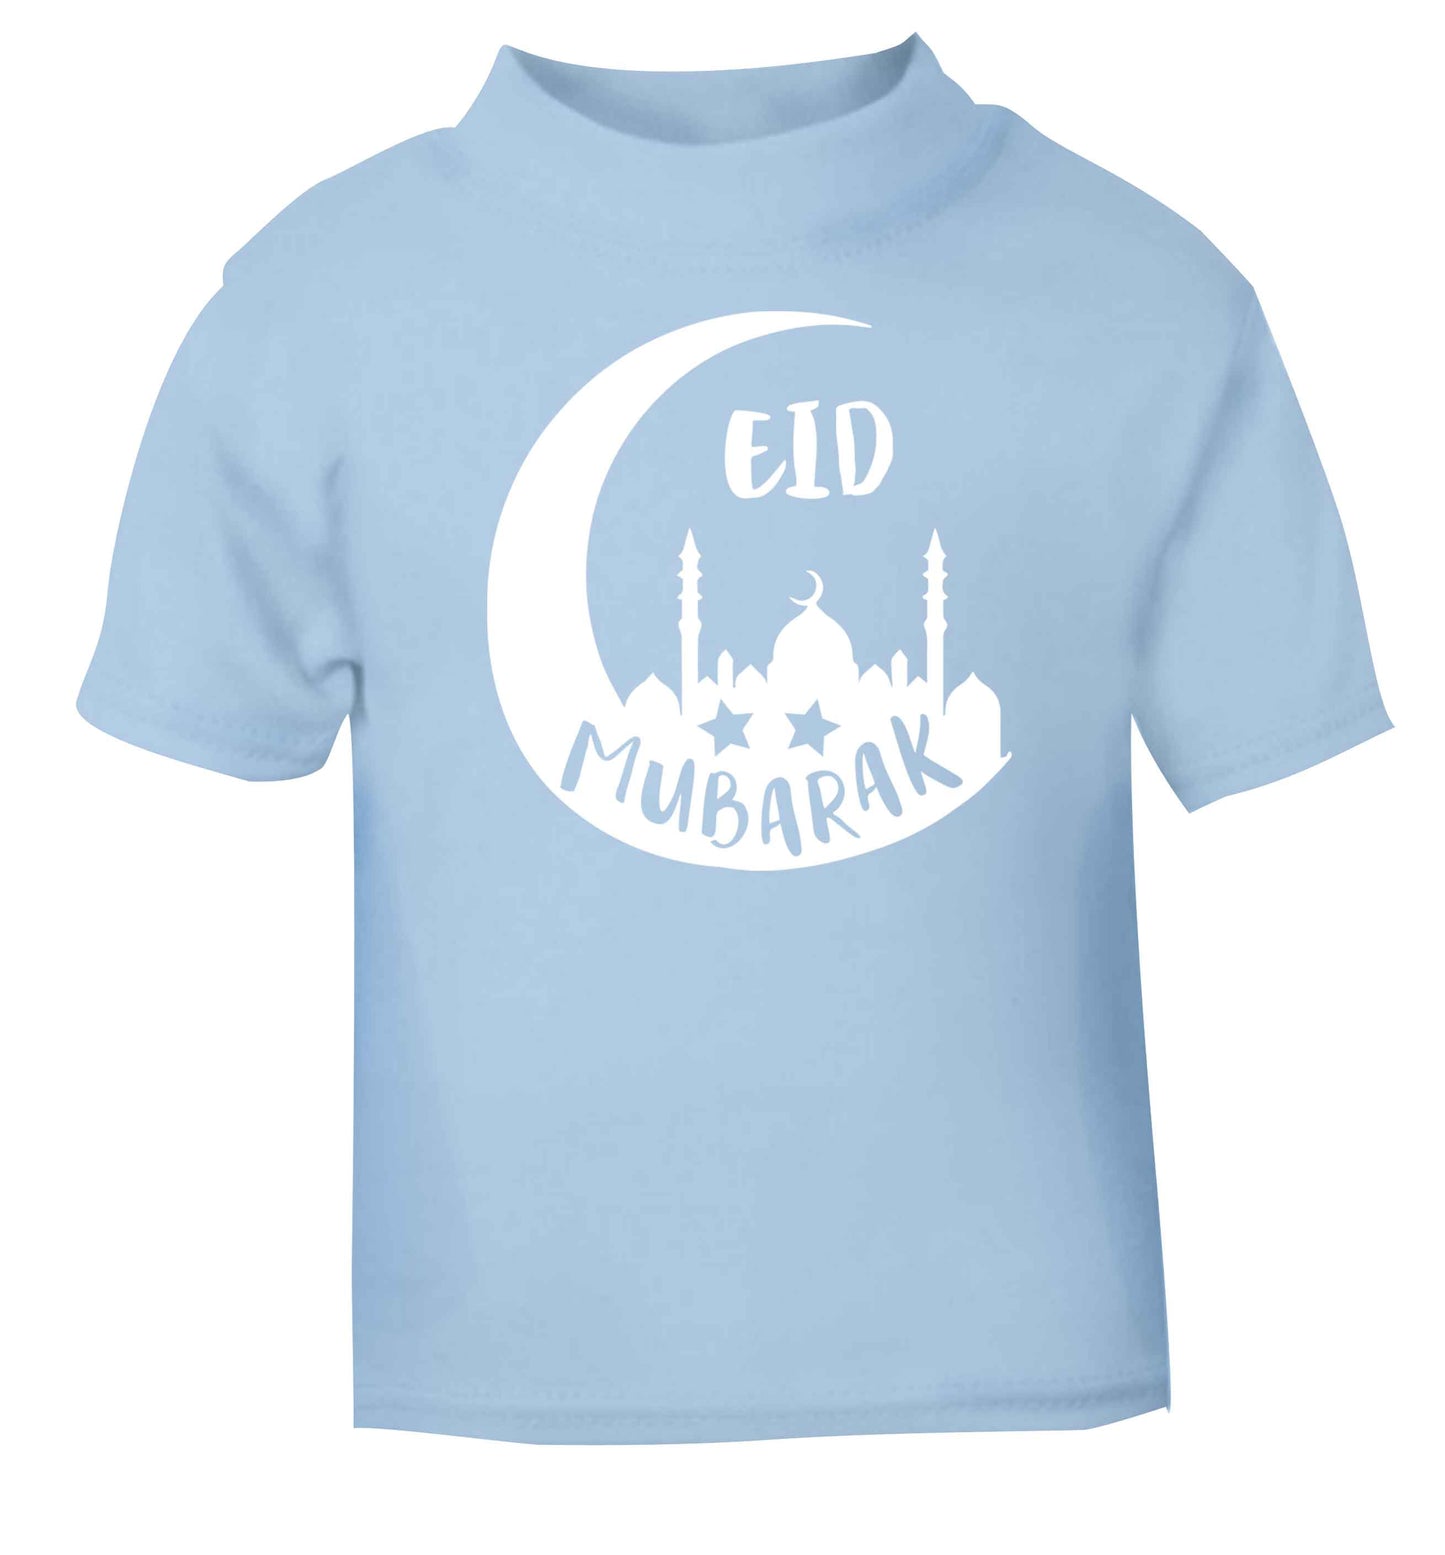 Eid mubarak light blue baby toddler Tshirt 2 Years